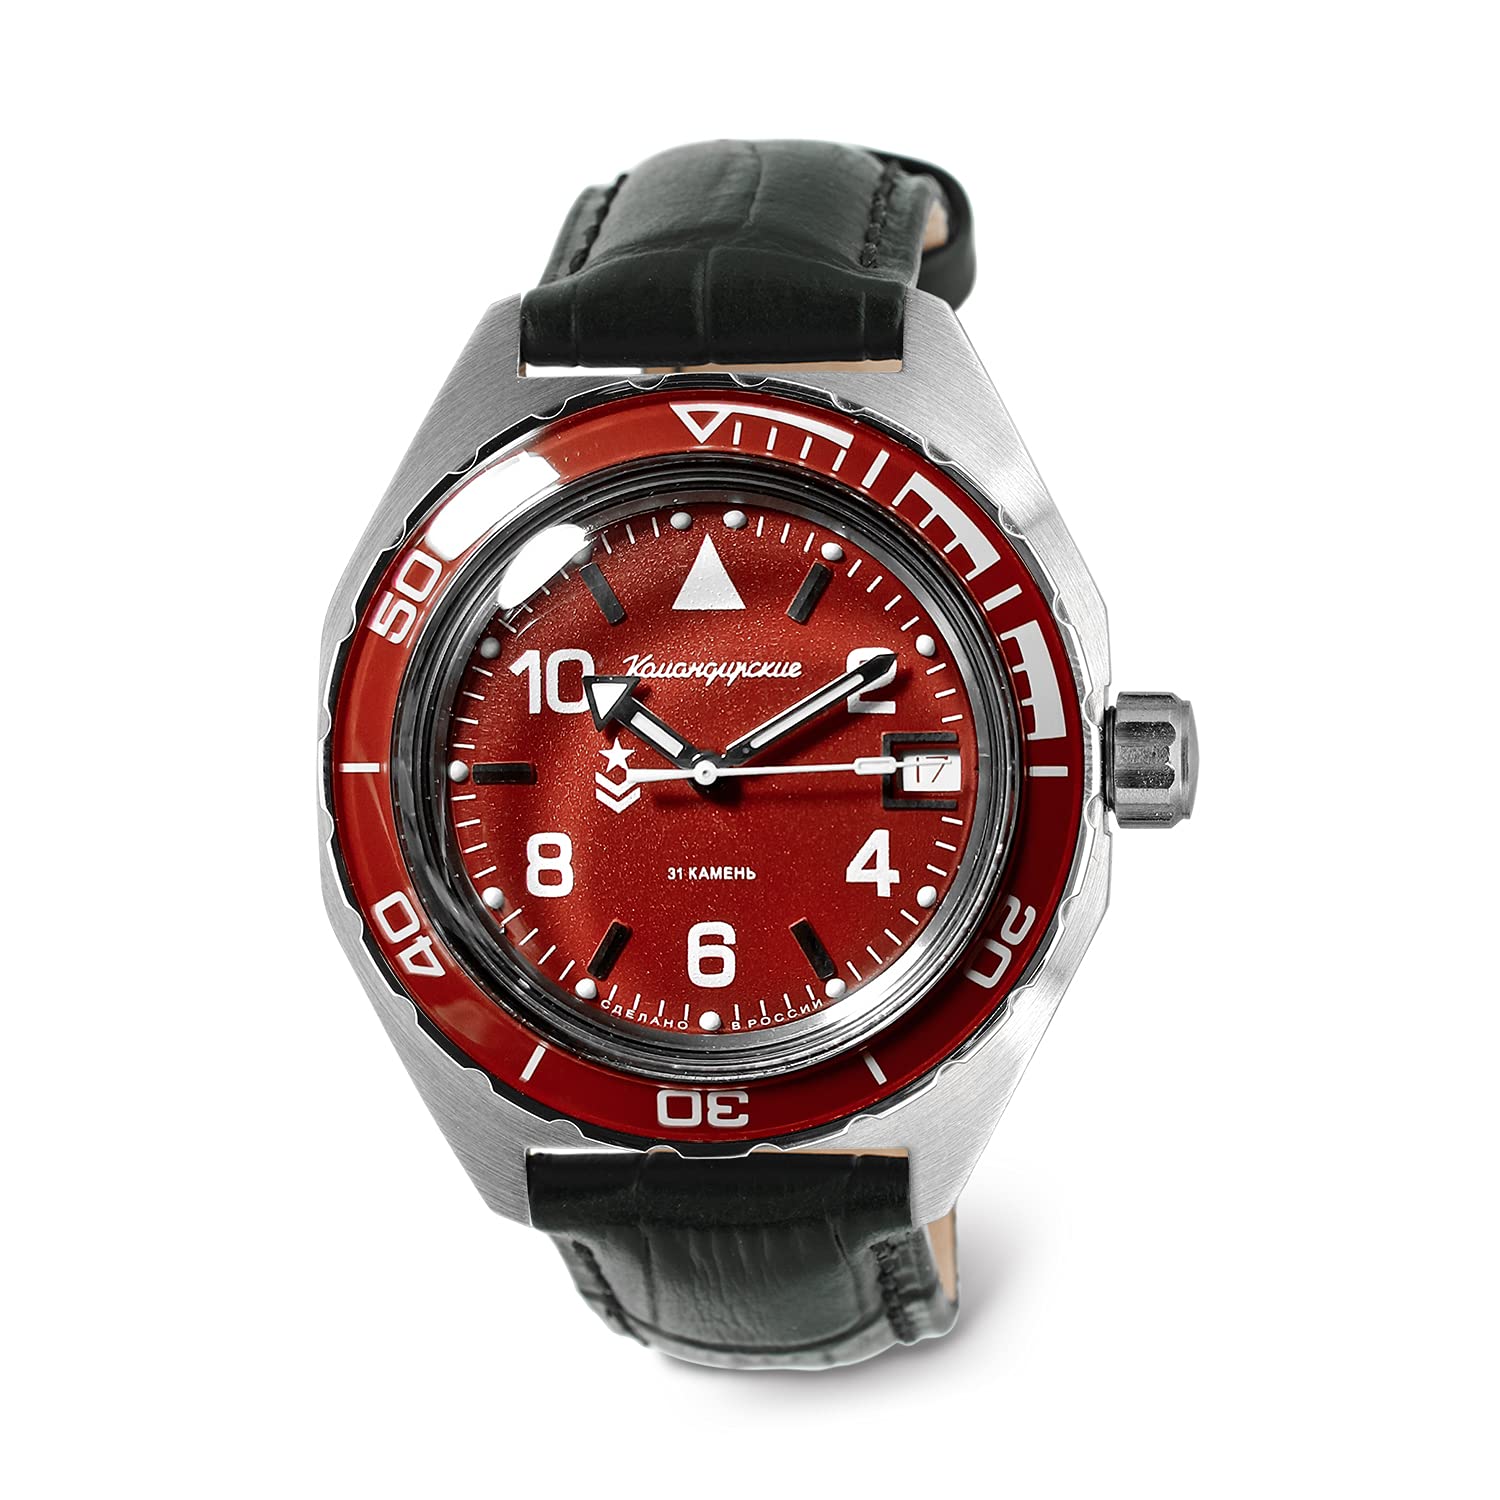 VOSTOK | Komandirskie 650841 Automatic Mechanical Self-Winding Diver Wrist Watch